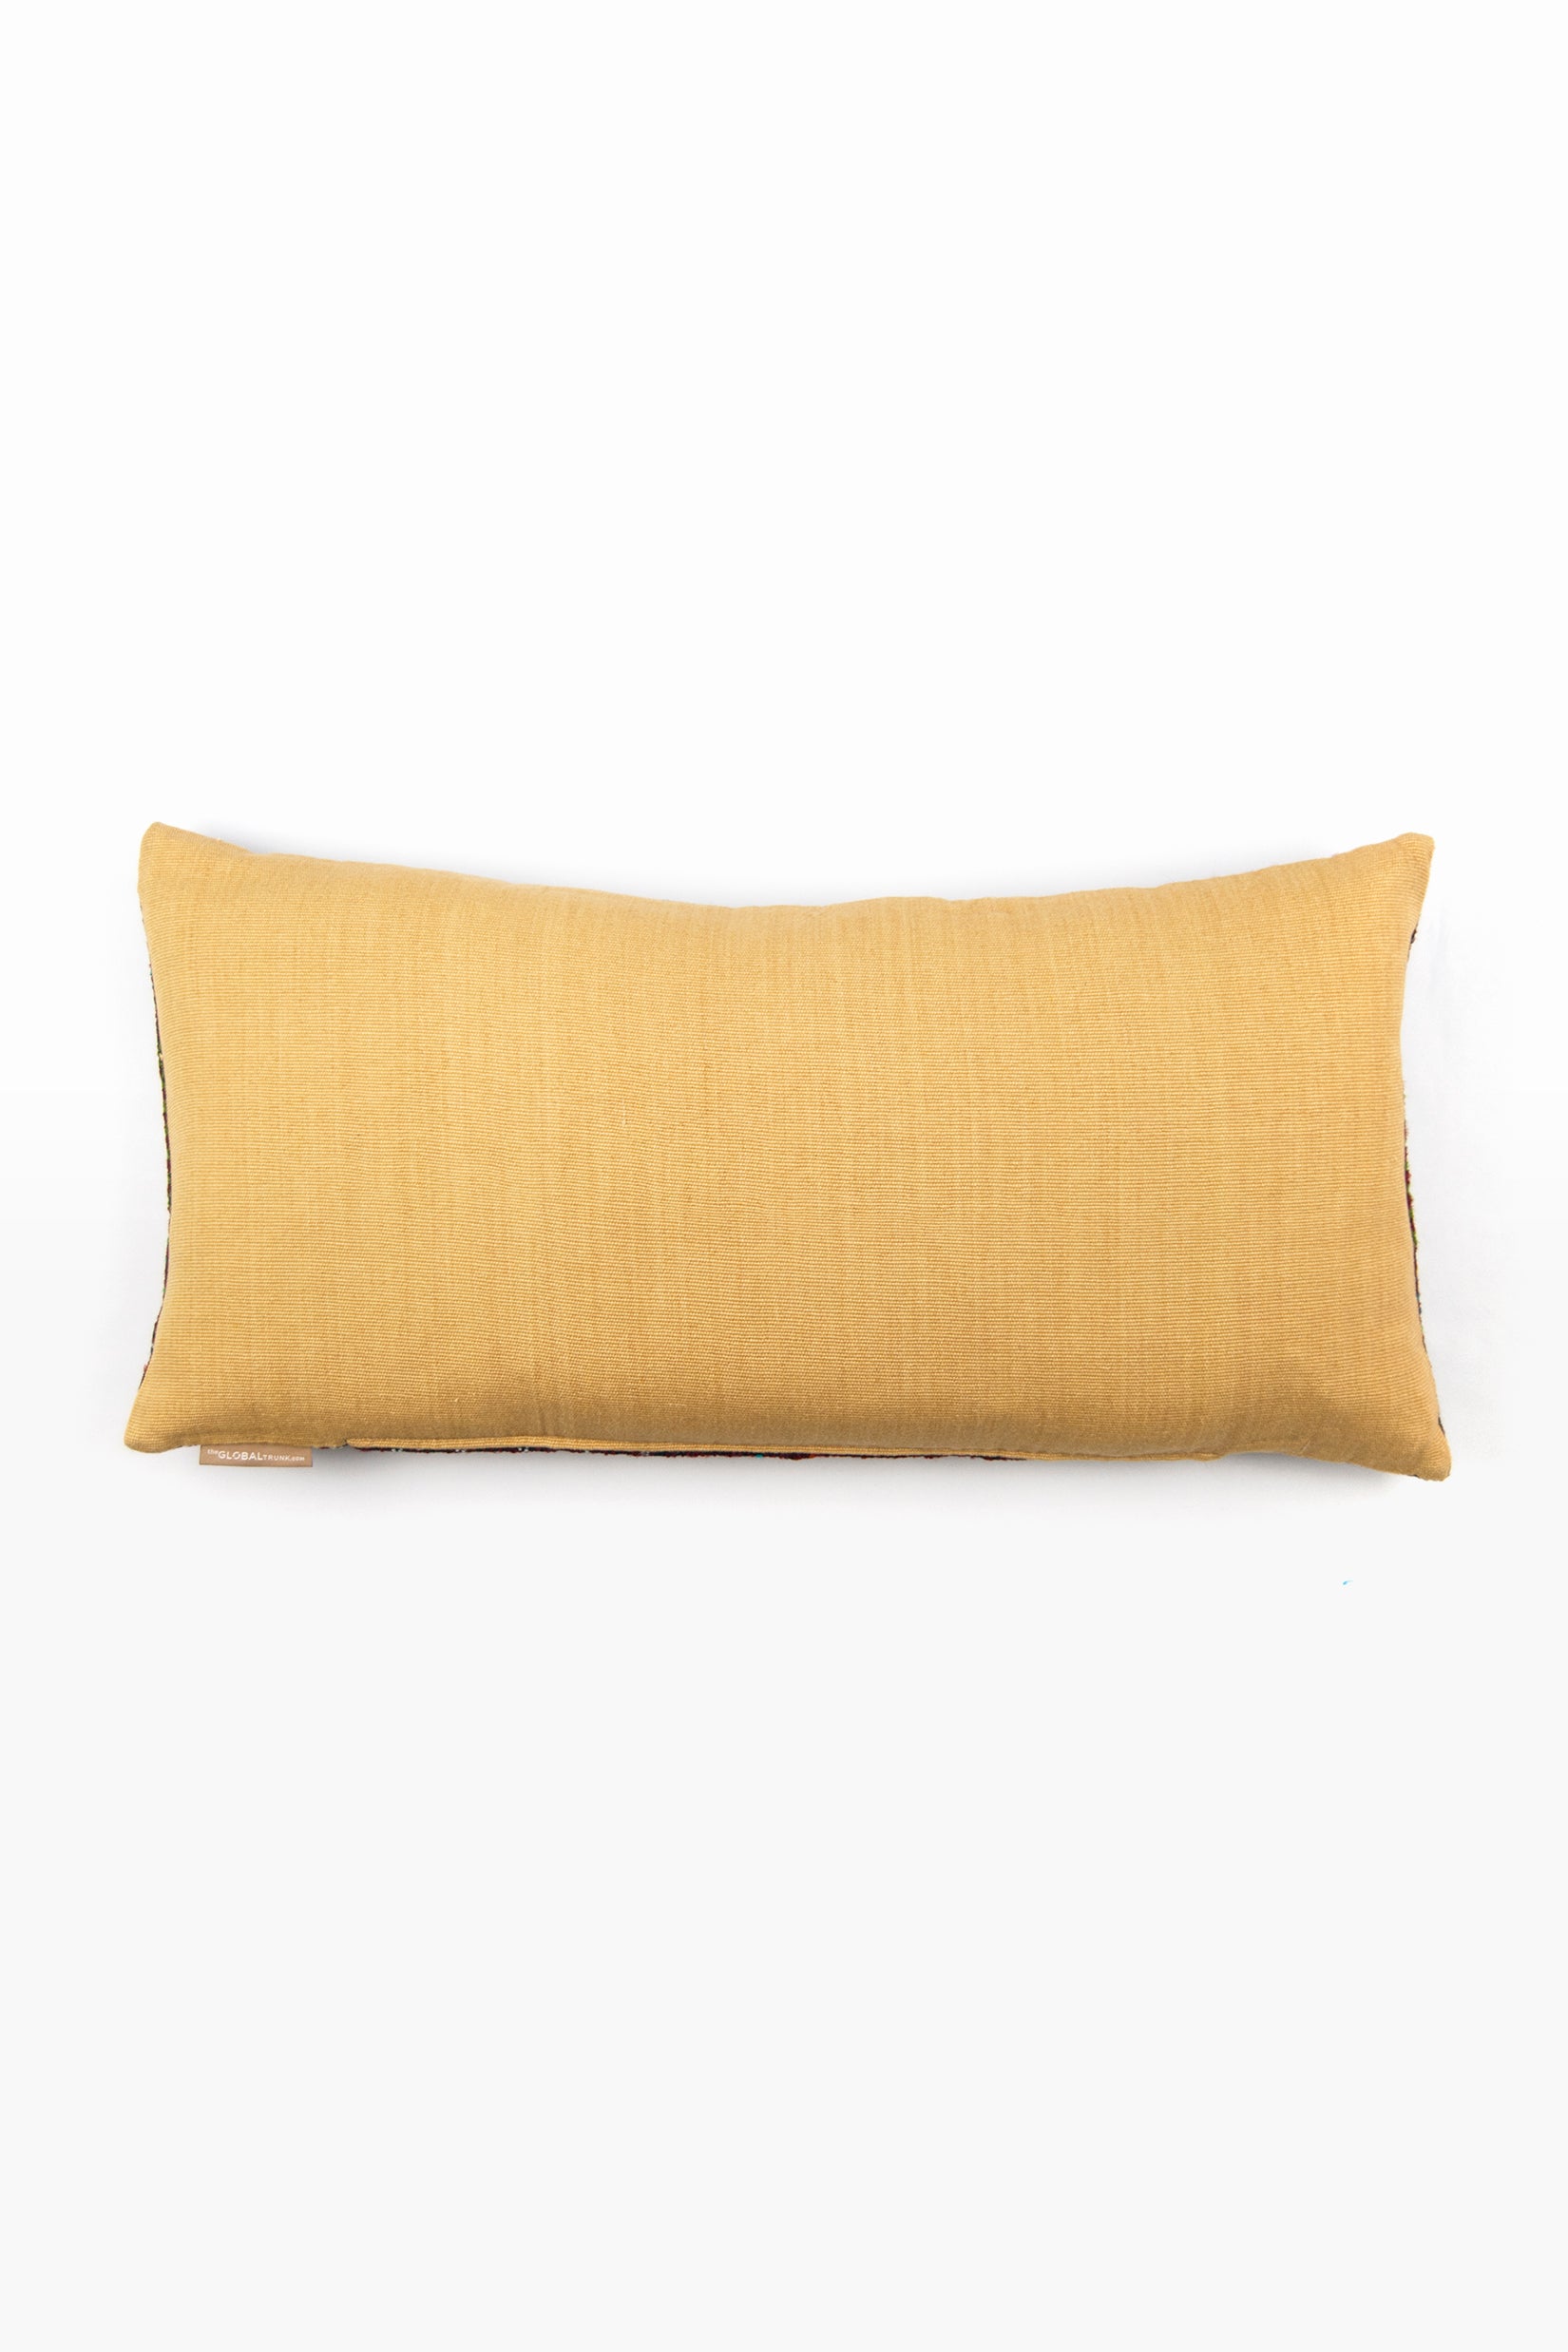 Maya Heirloom Pillow No. 390